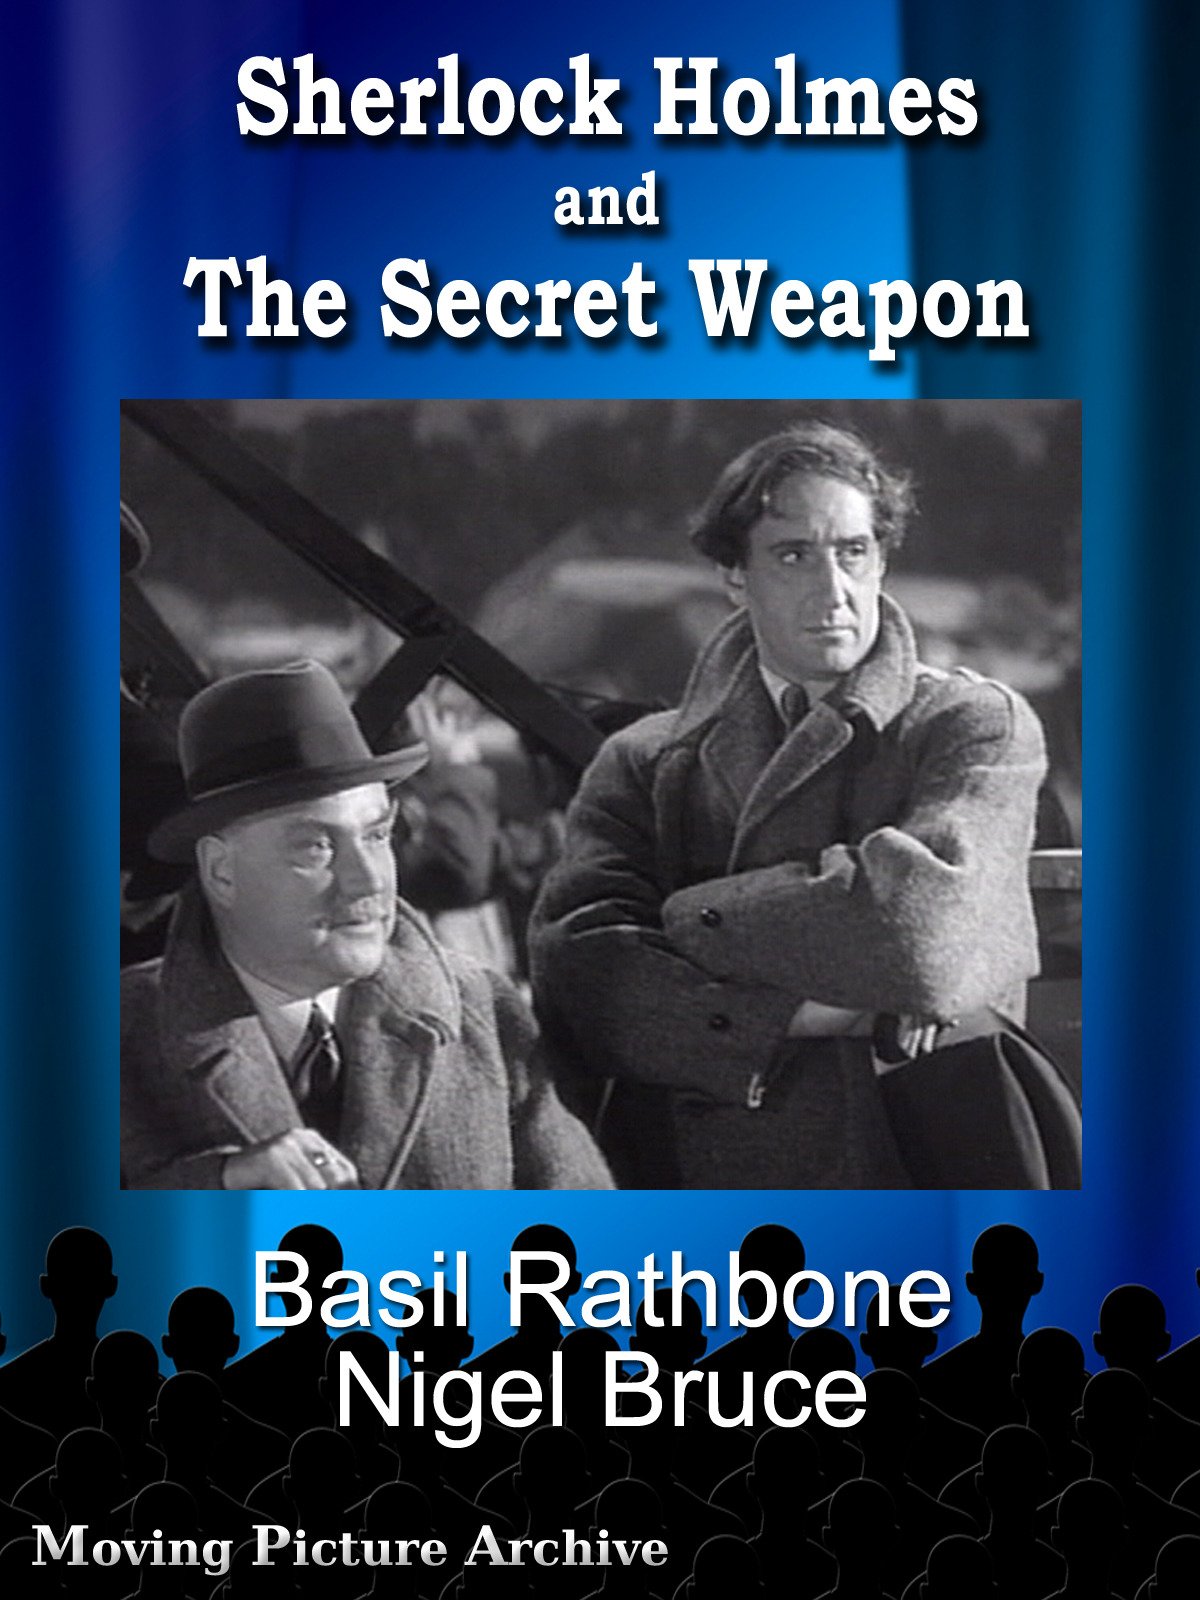 Sherlock Holmes and The Secret Weapon (1942) starring Basil Rathbone, Nigel Bruce, Lionel Atwill